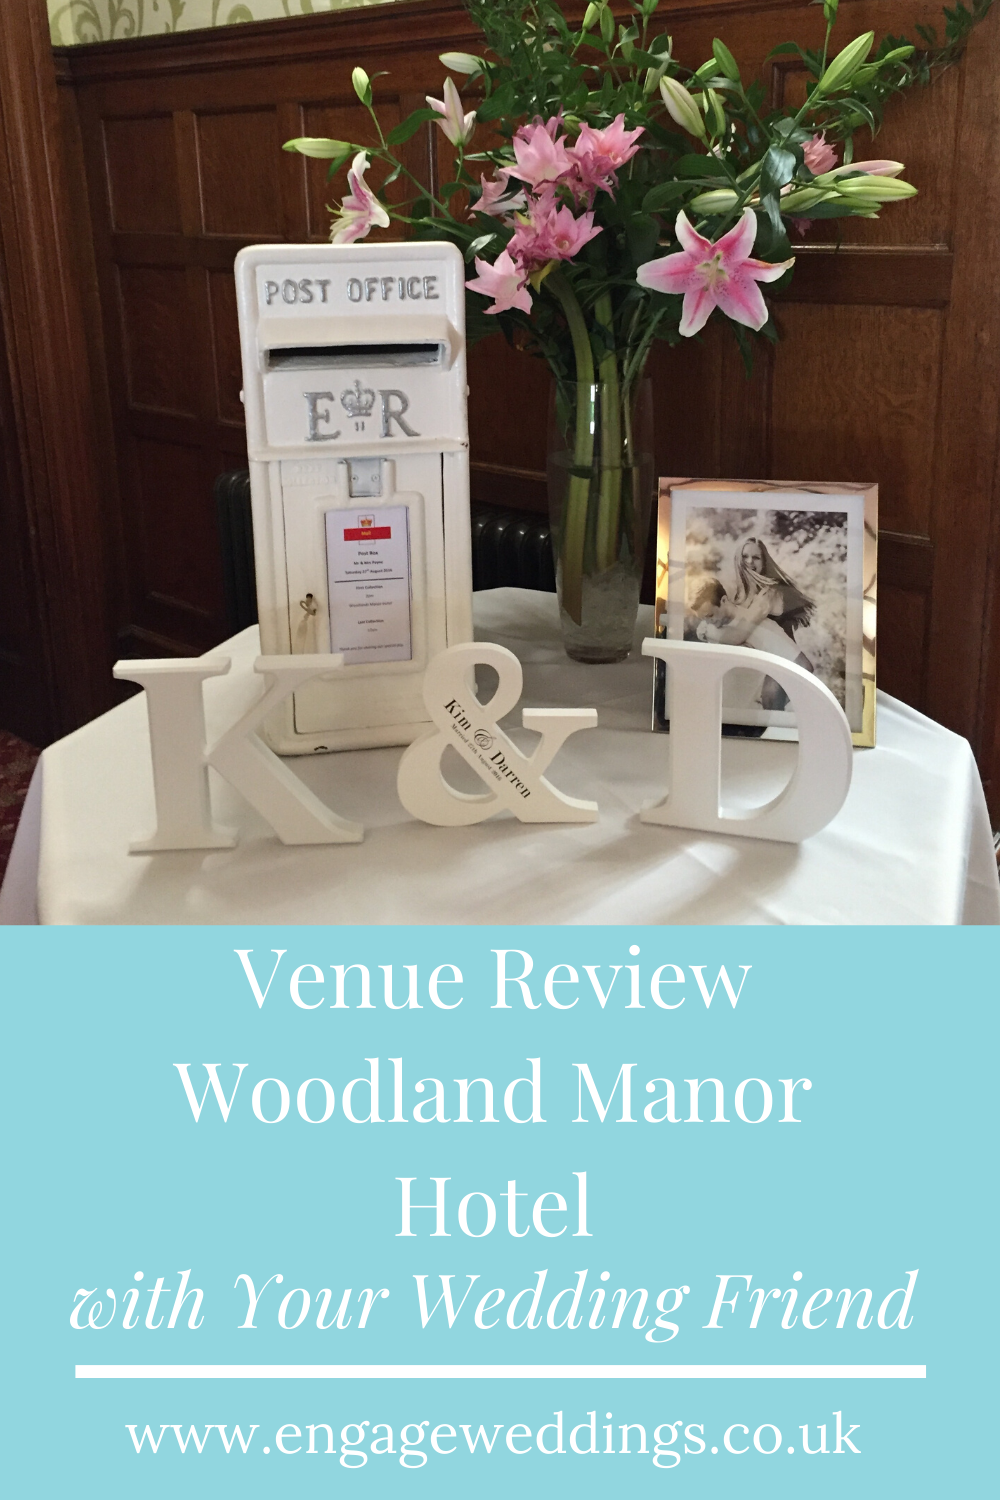 Venue Review Woodland Manor Hotel_engageweddings.co.uk